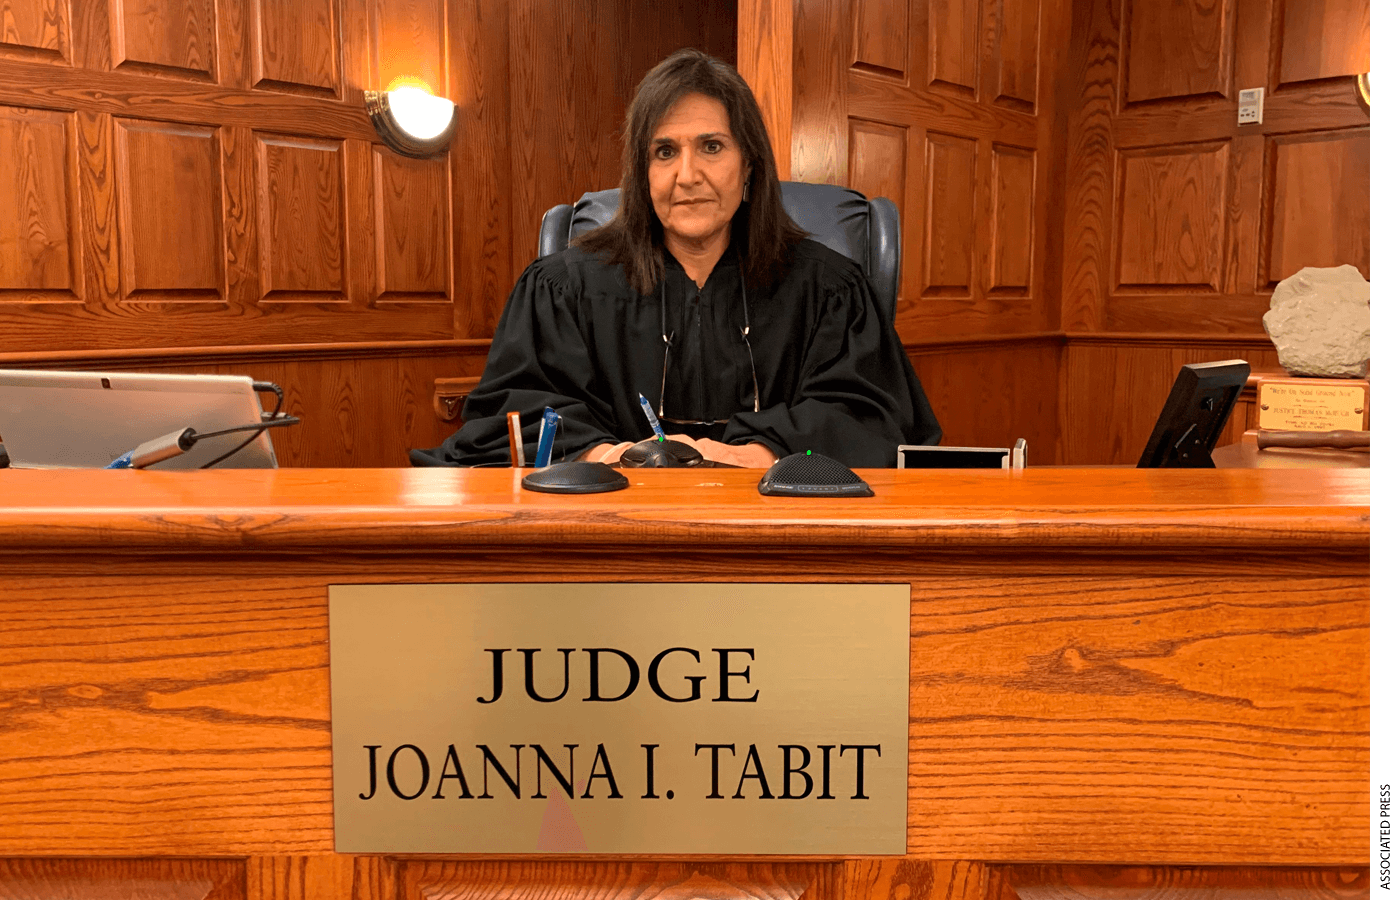 West Virginia circut court judge Joanna Tabit